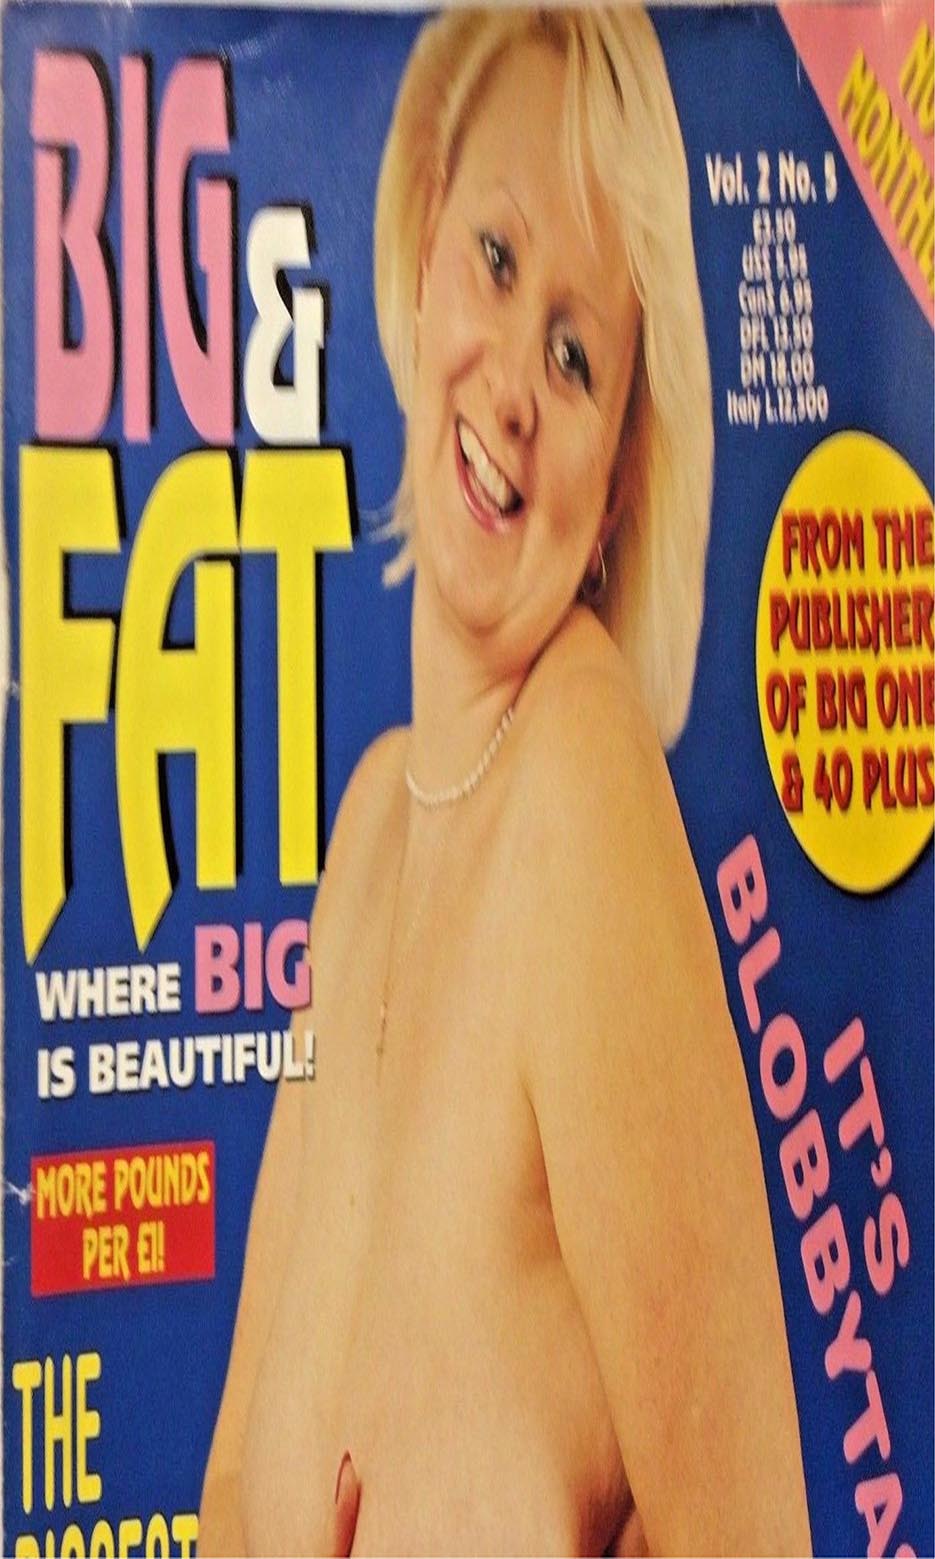 Big & Fat Vol. 2 # 5 magazine back issue Big & Fat magizine back copy 